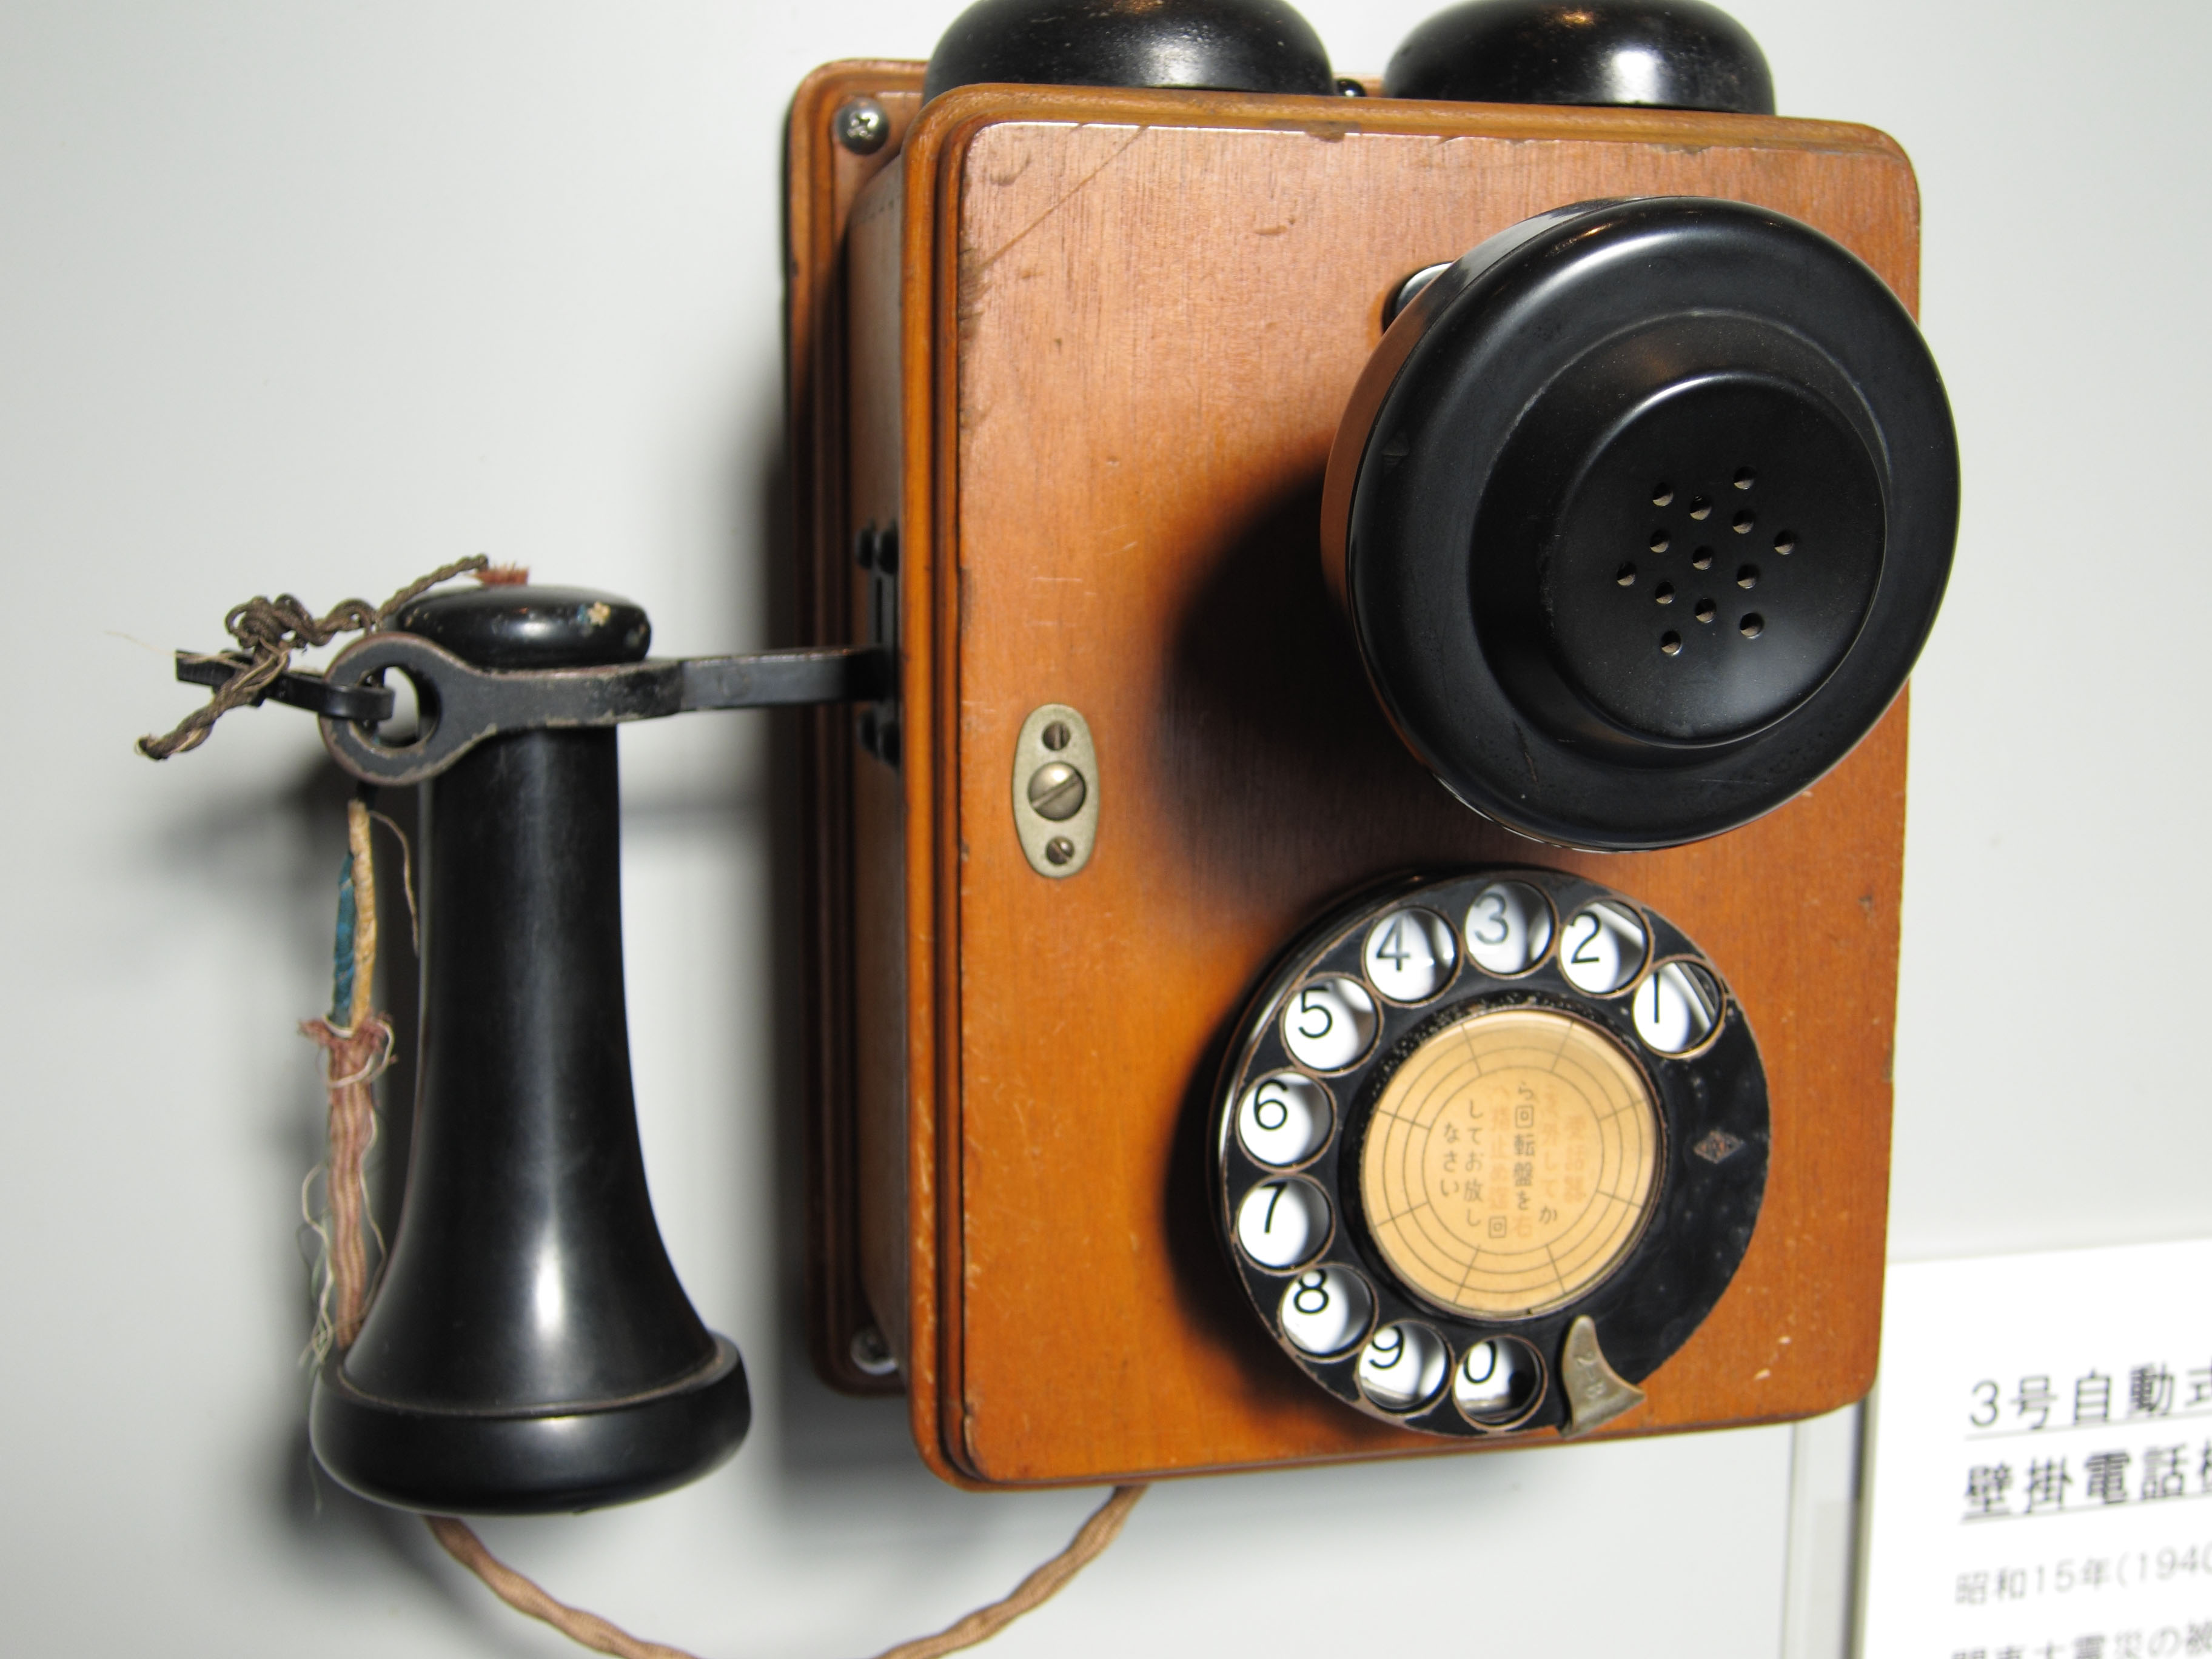 Домашний 1 архив. Аппарат телефонный ge 9320. Телефонный аппарат НКВД. Старый телефон. Старинный телефон.